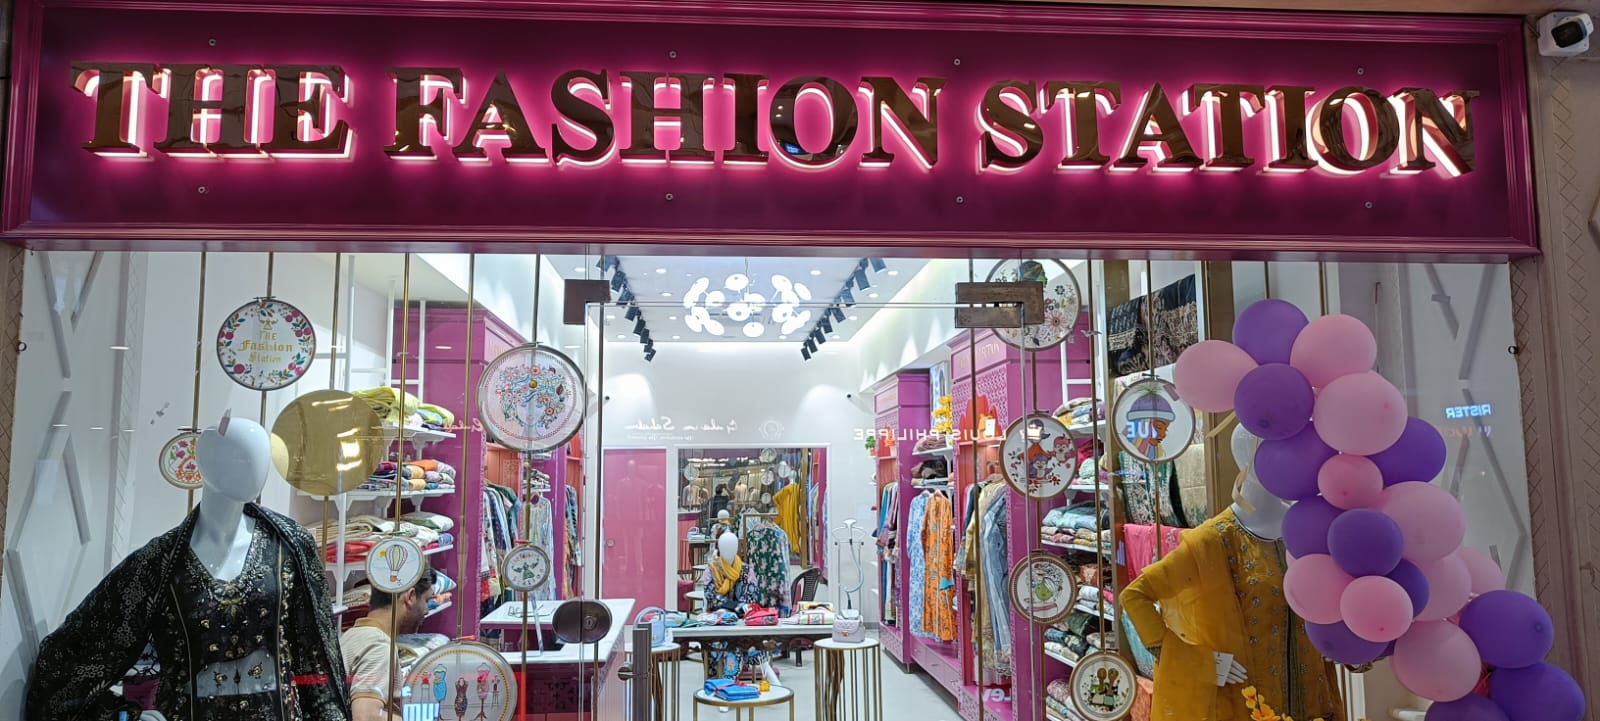 The fashion station